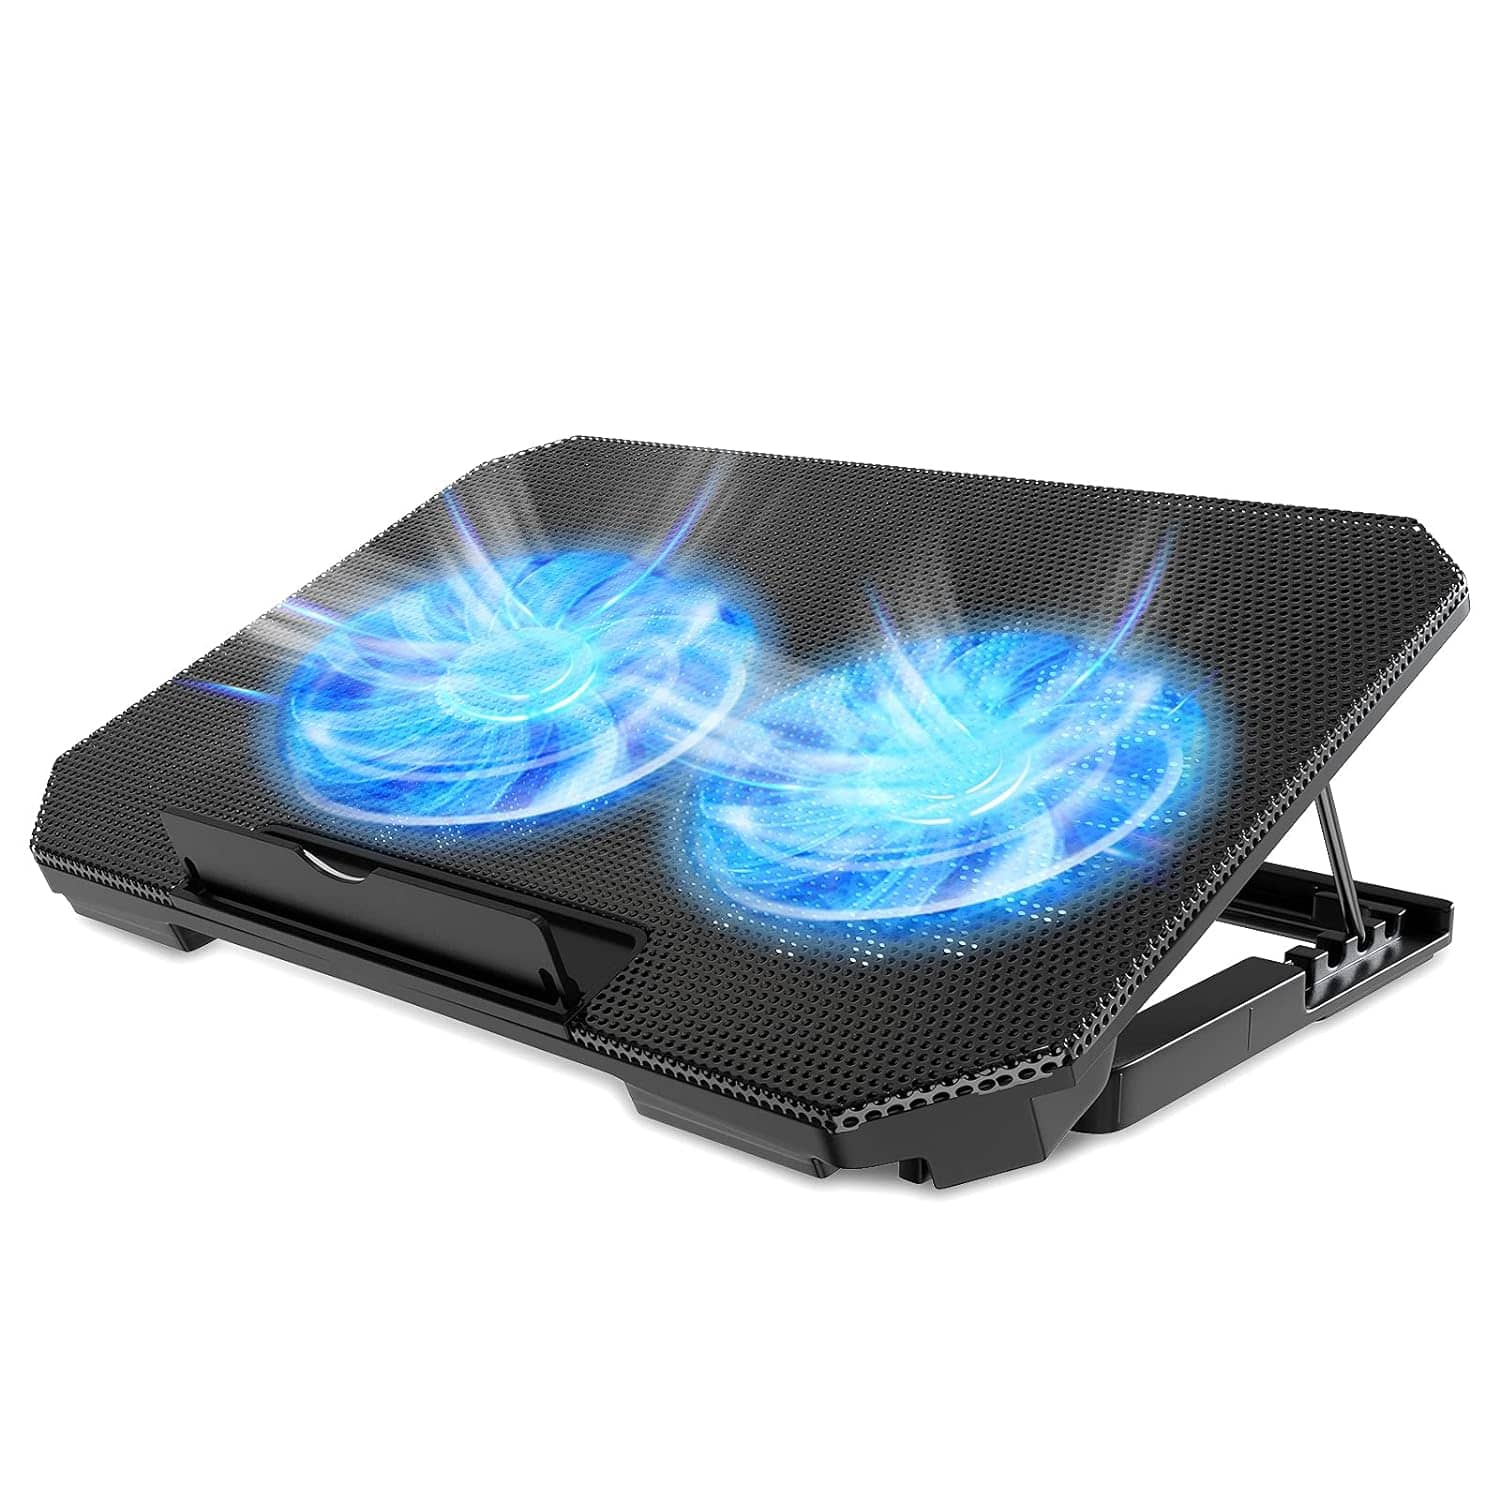 N11 Adjustable Mute Notebook Dual Fan Cooler Desktop Laptop Cooling Stand Blue Light 16